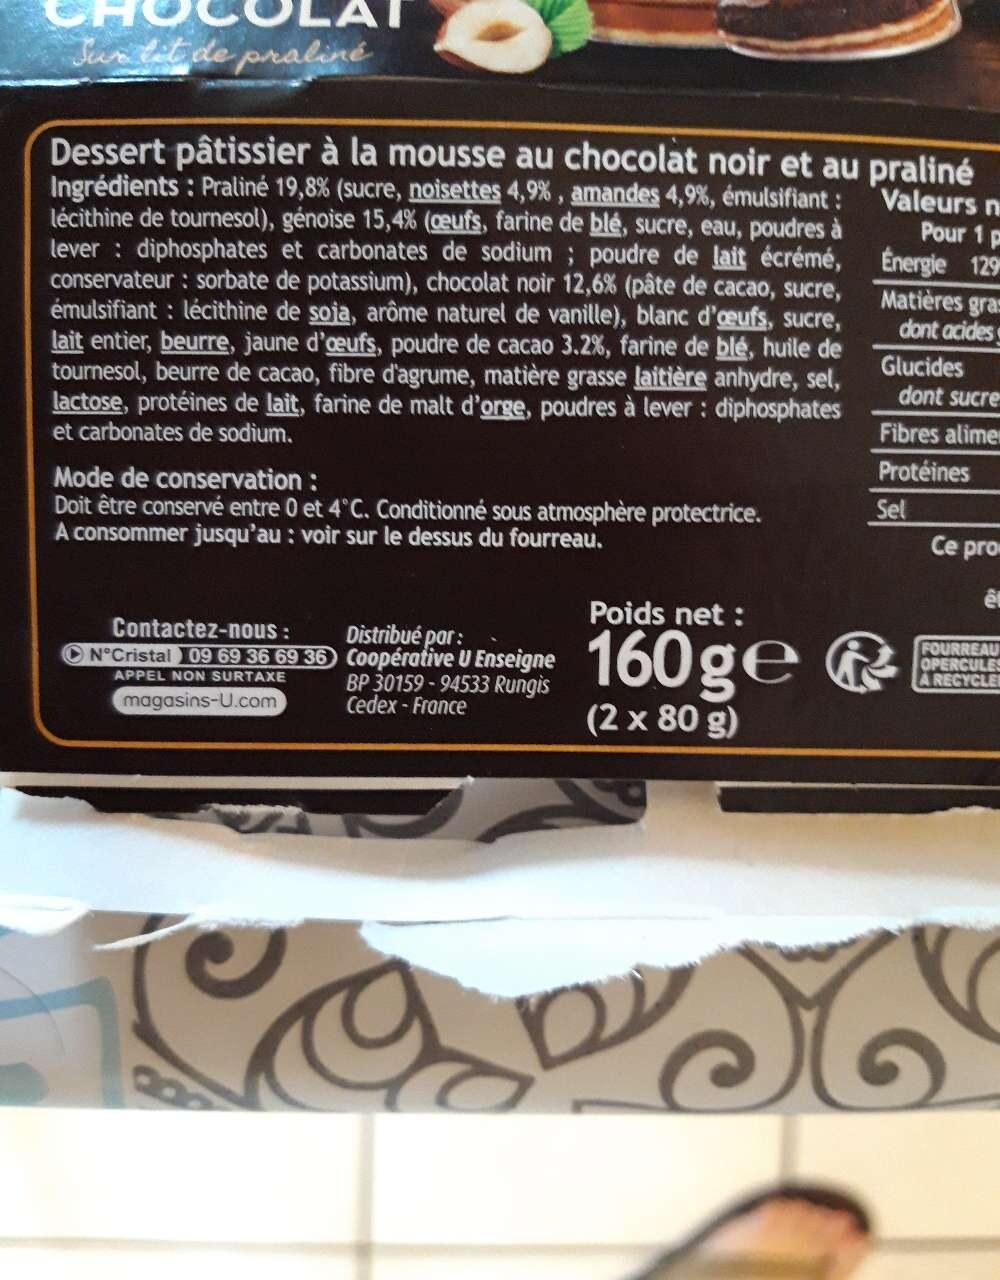 Dessert pâtissier royal chocolat sur lit de praliné - المكونات - fr